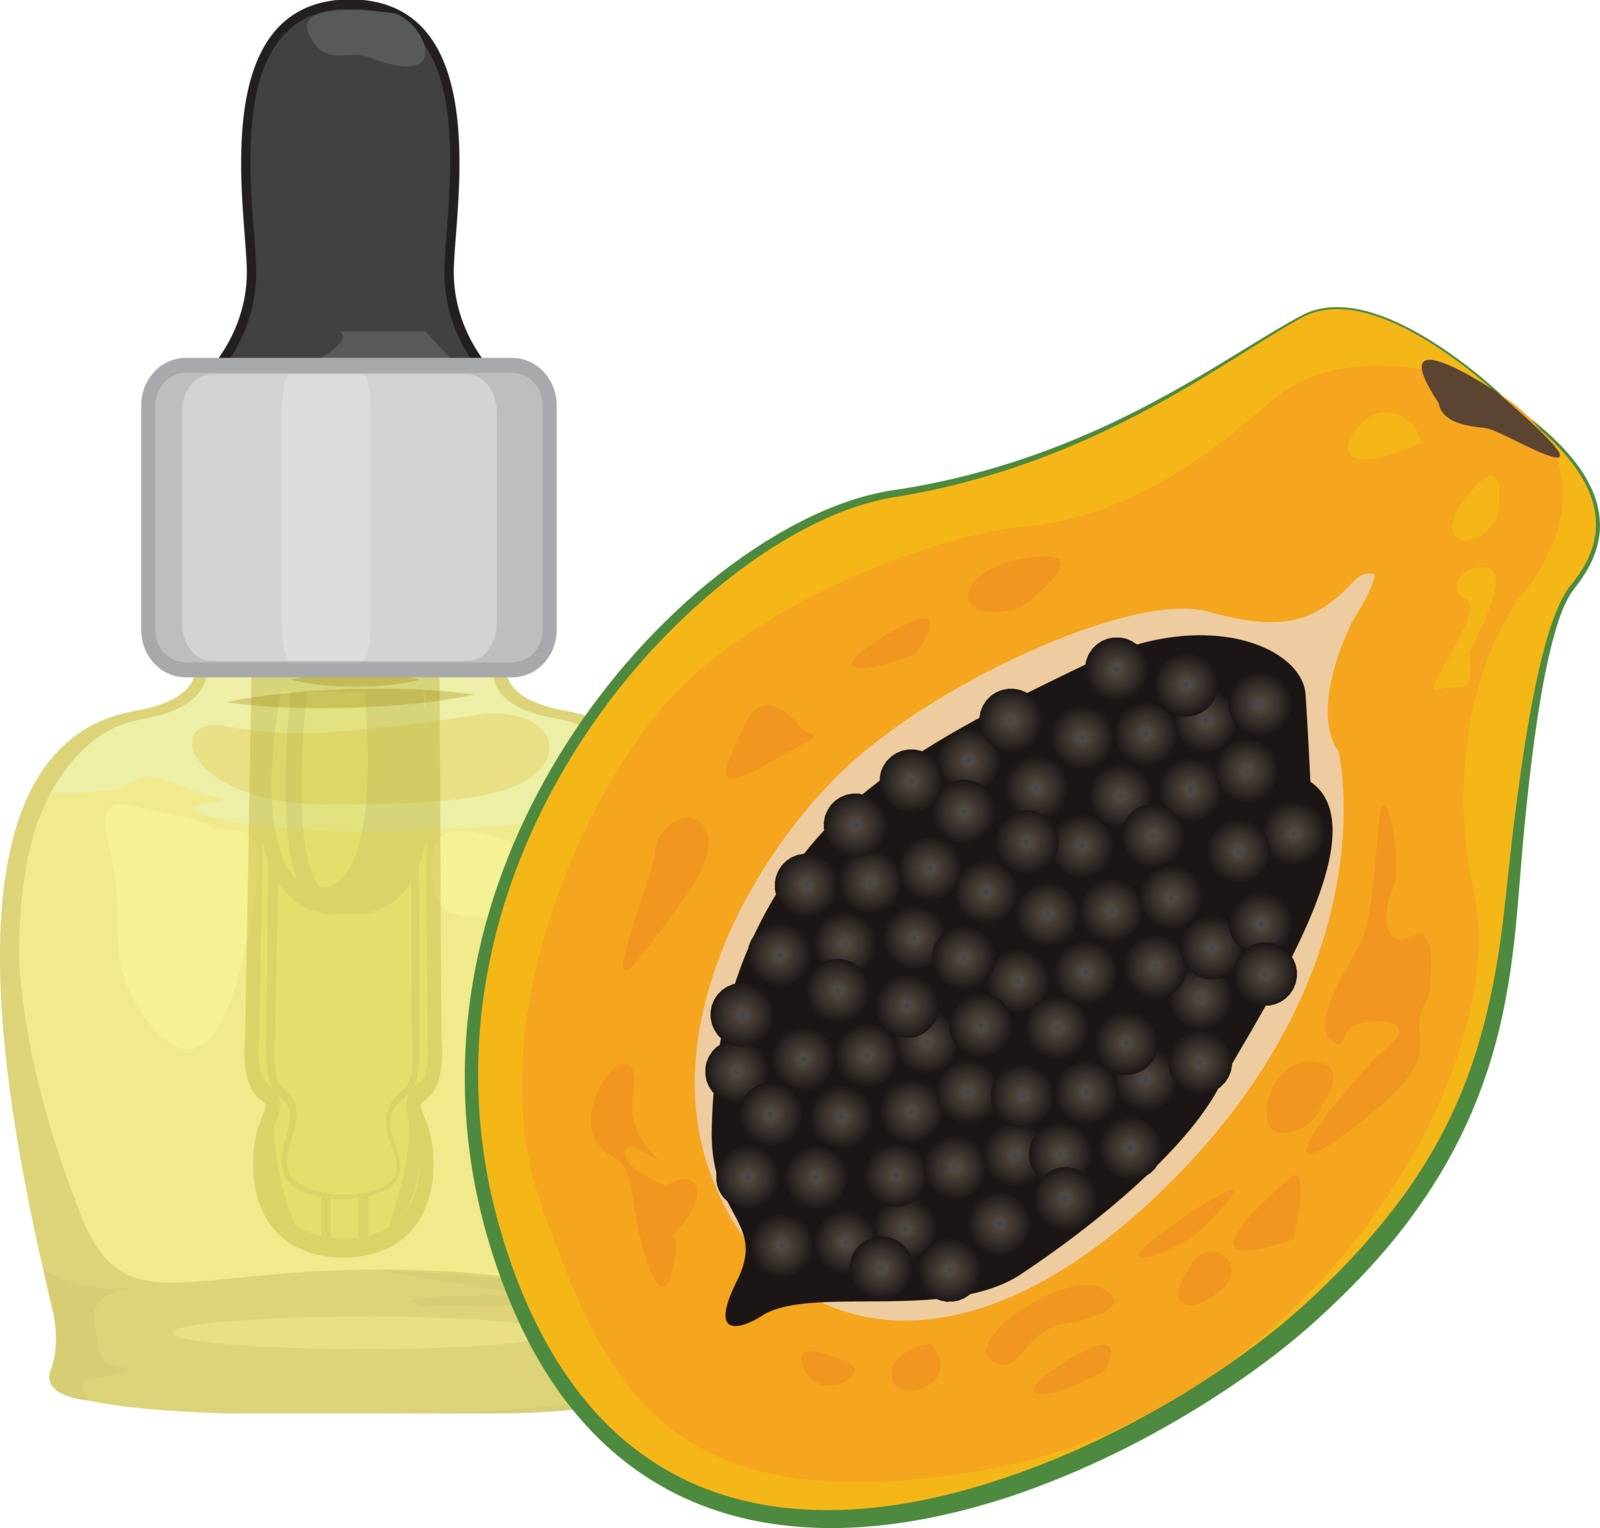 Papaya seed  essential oil vector illustration isolated